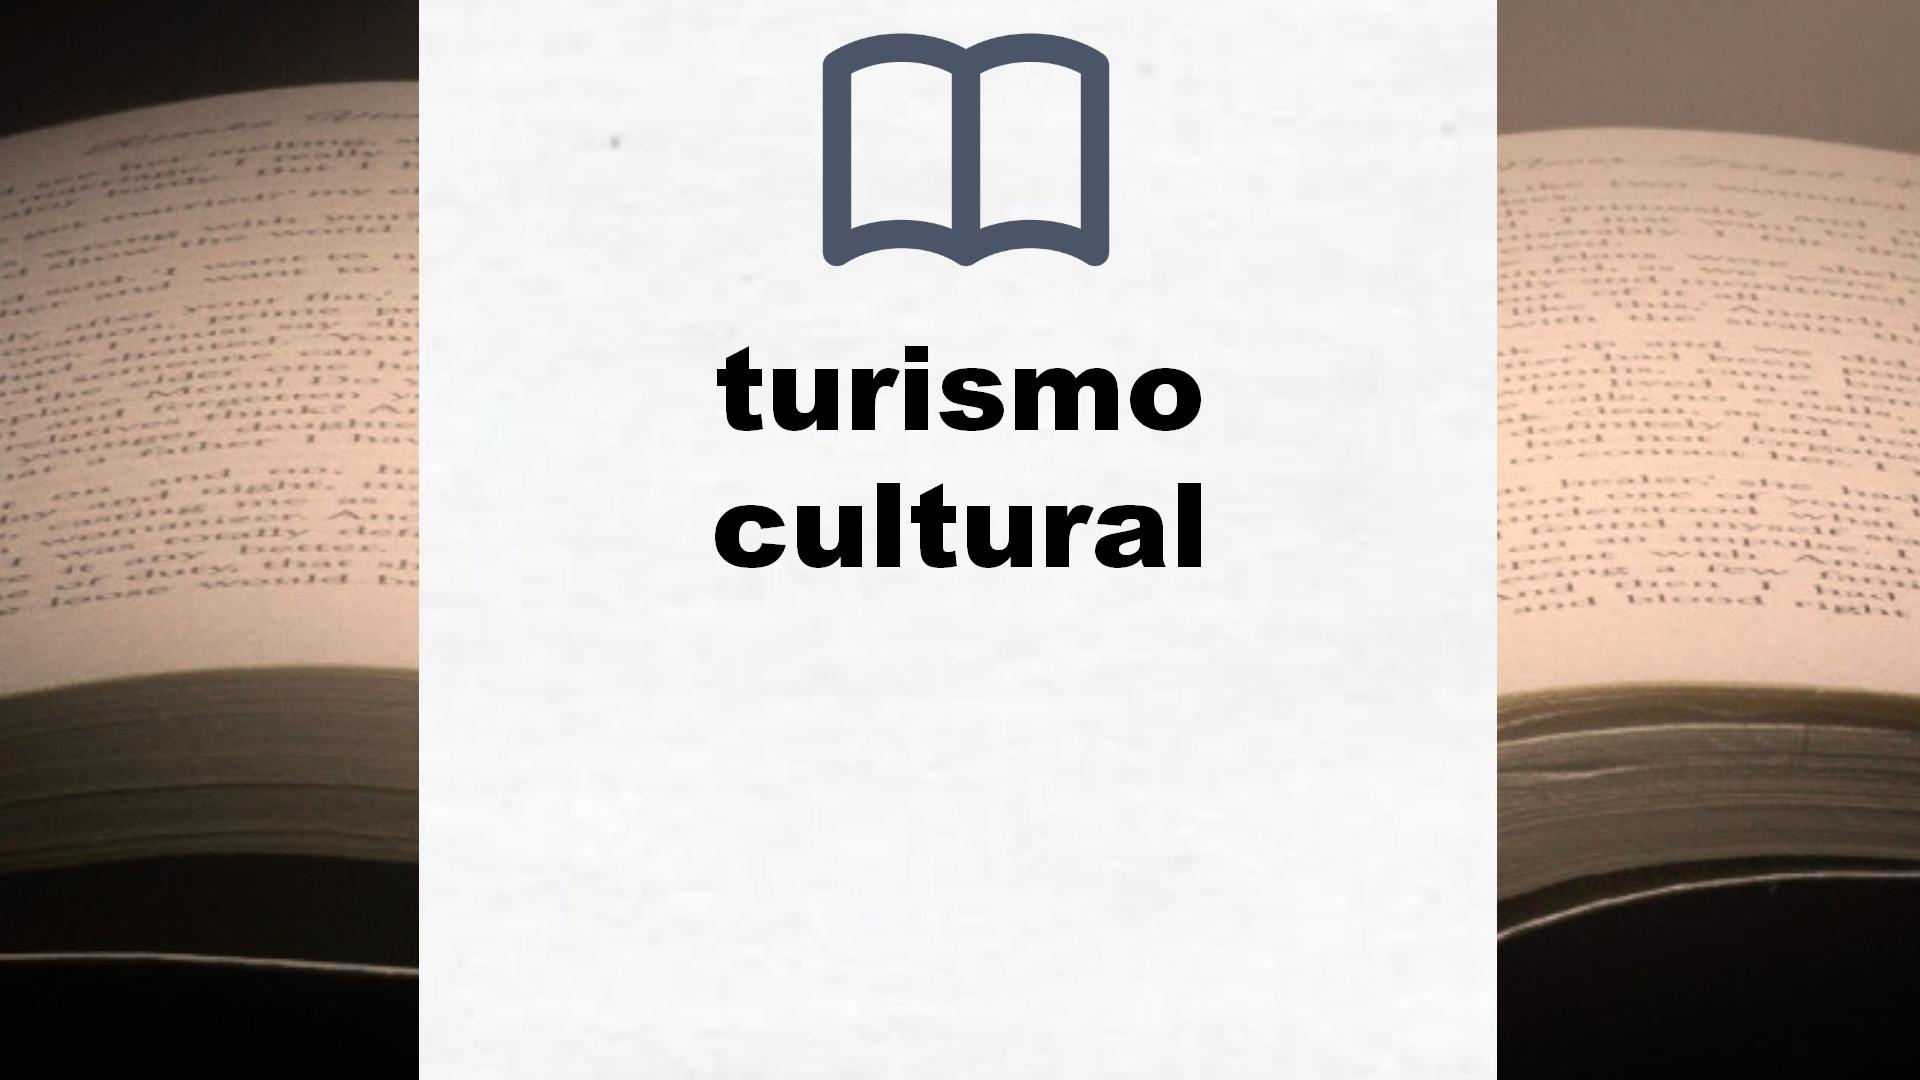 Libros sobre turismo cultural